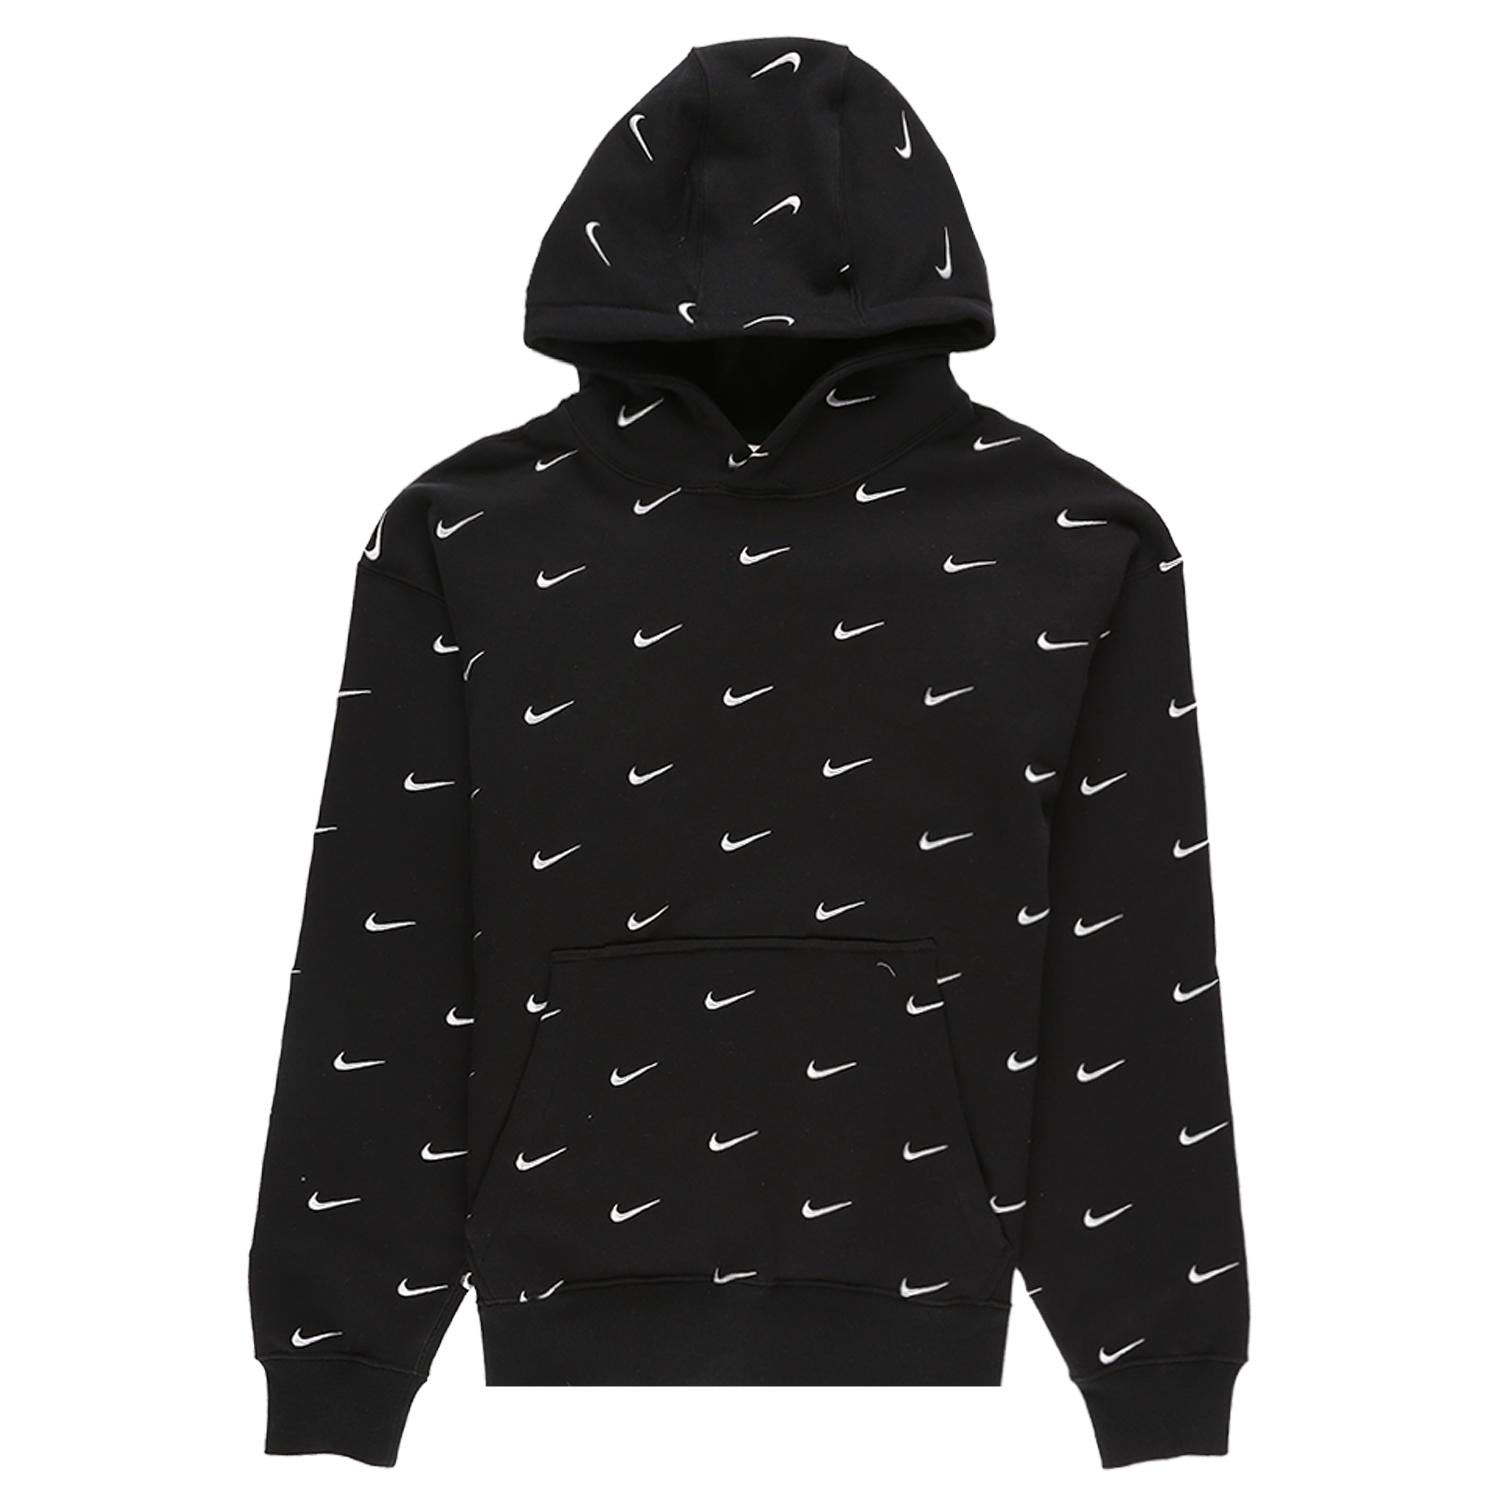 Nike Nrg Swoosh Logo Hoodie in Black for Men - Lyst